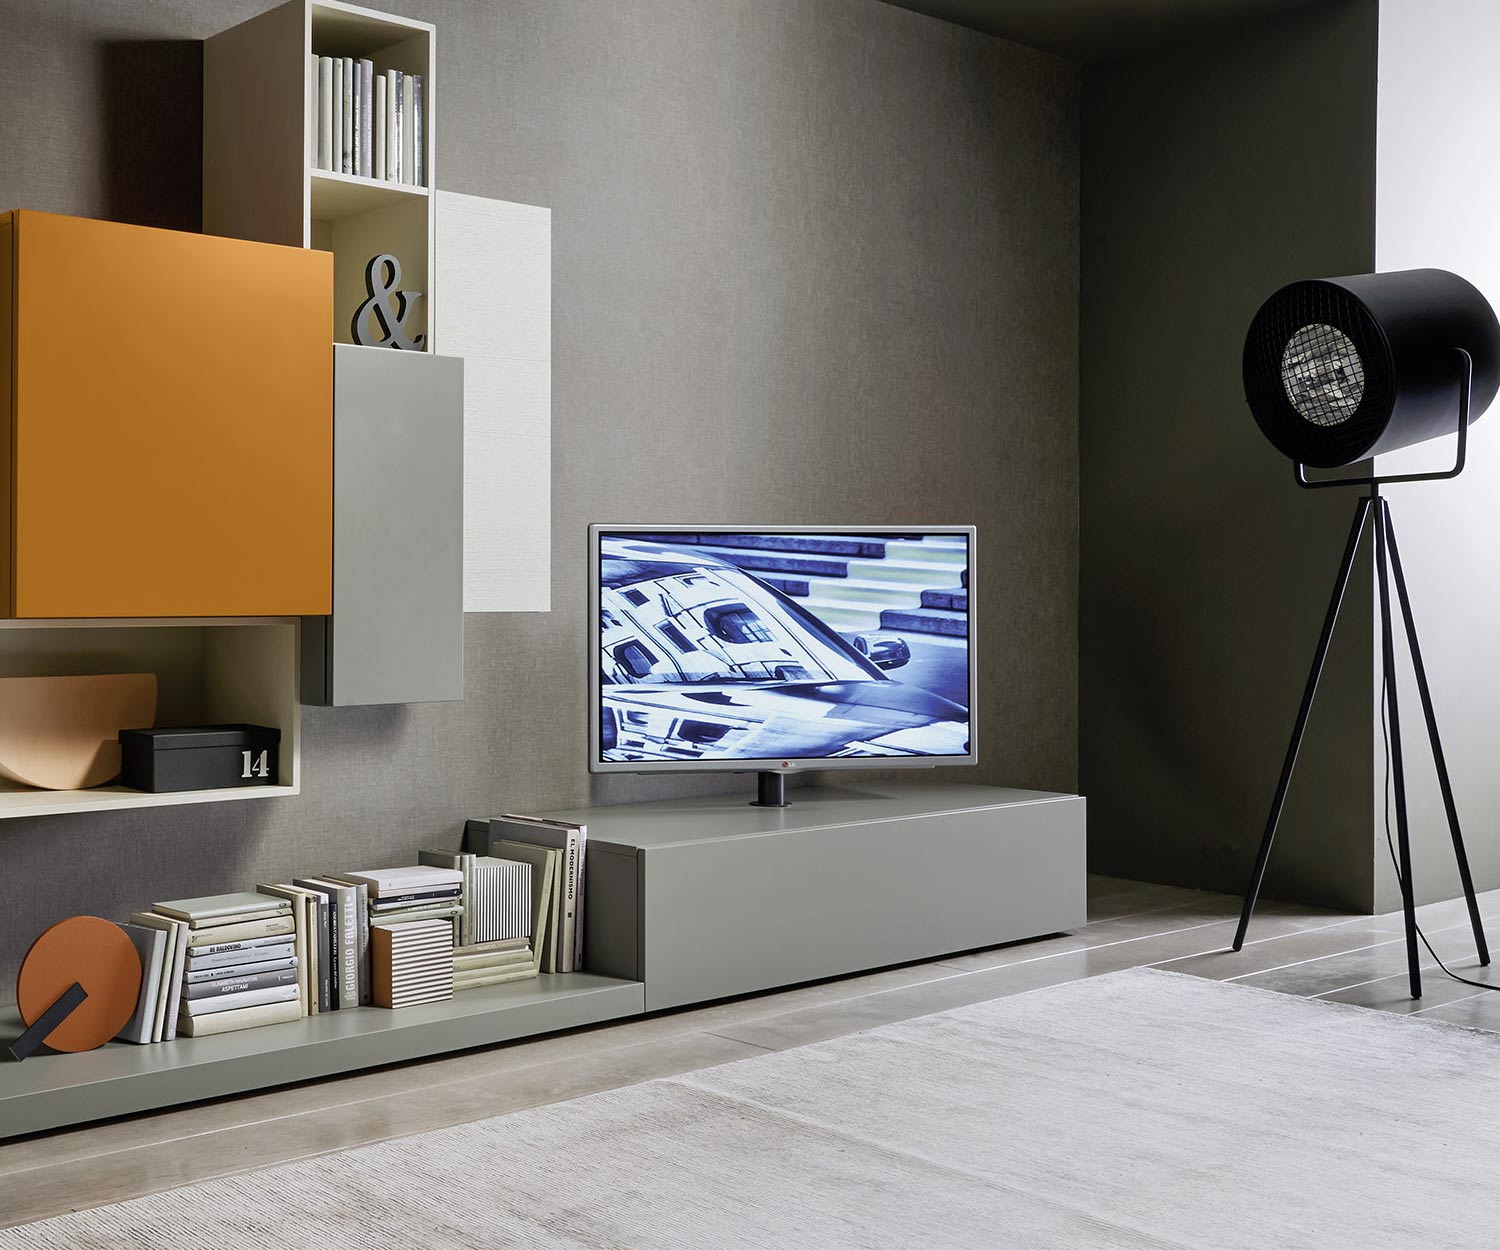 Haute qualité Livitalia Design Vesa Design Lowboard Meuble TV avec support TV pivotant